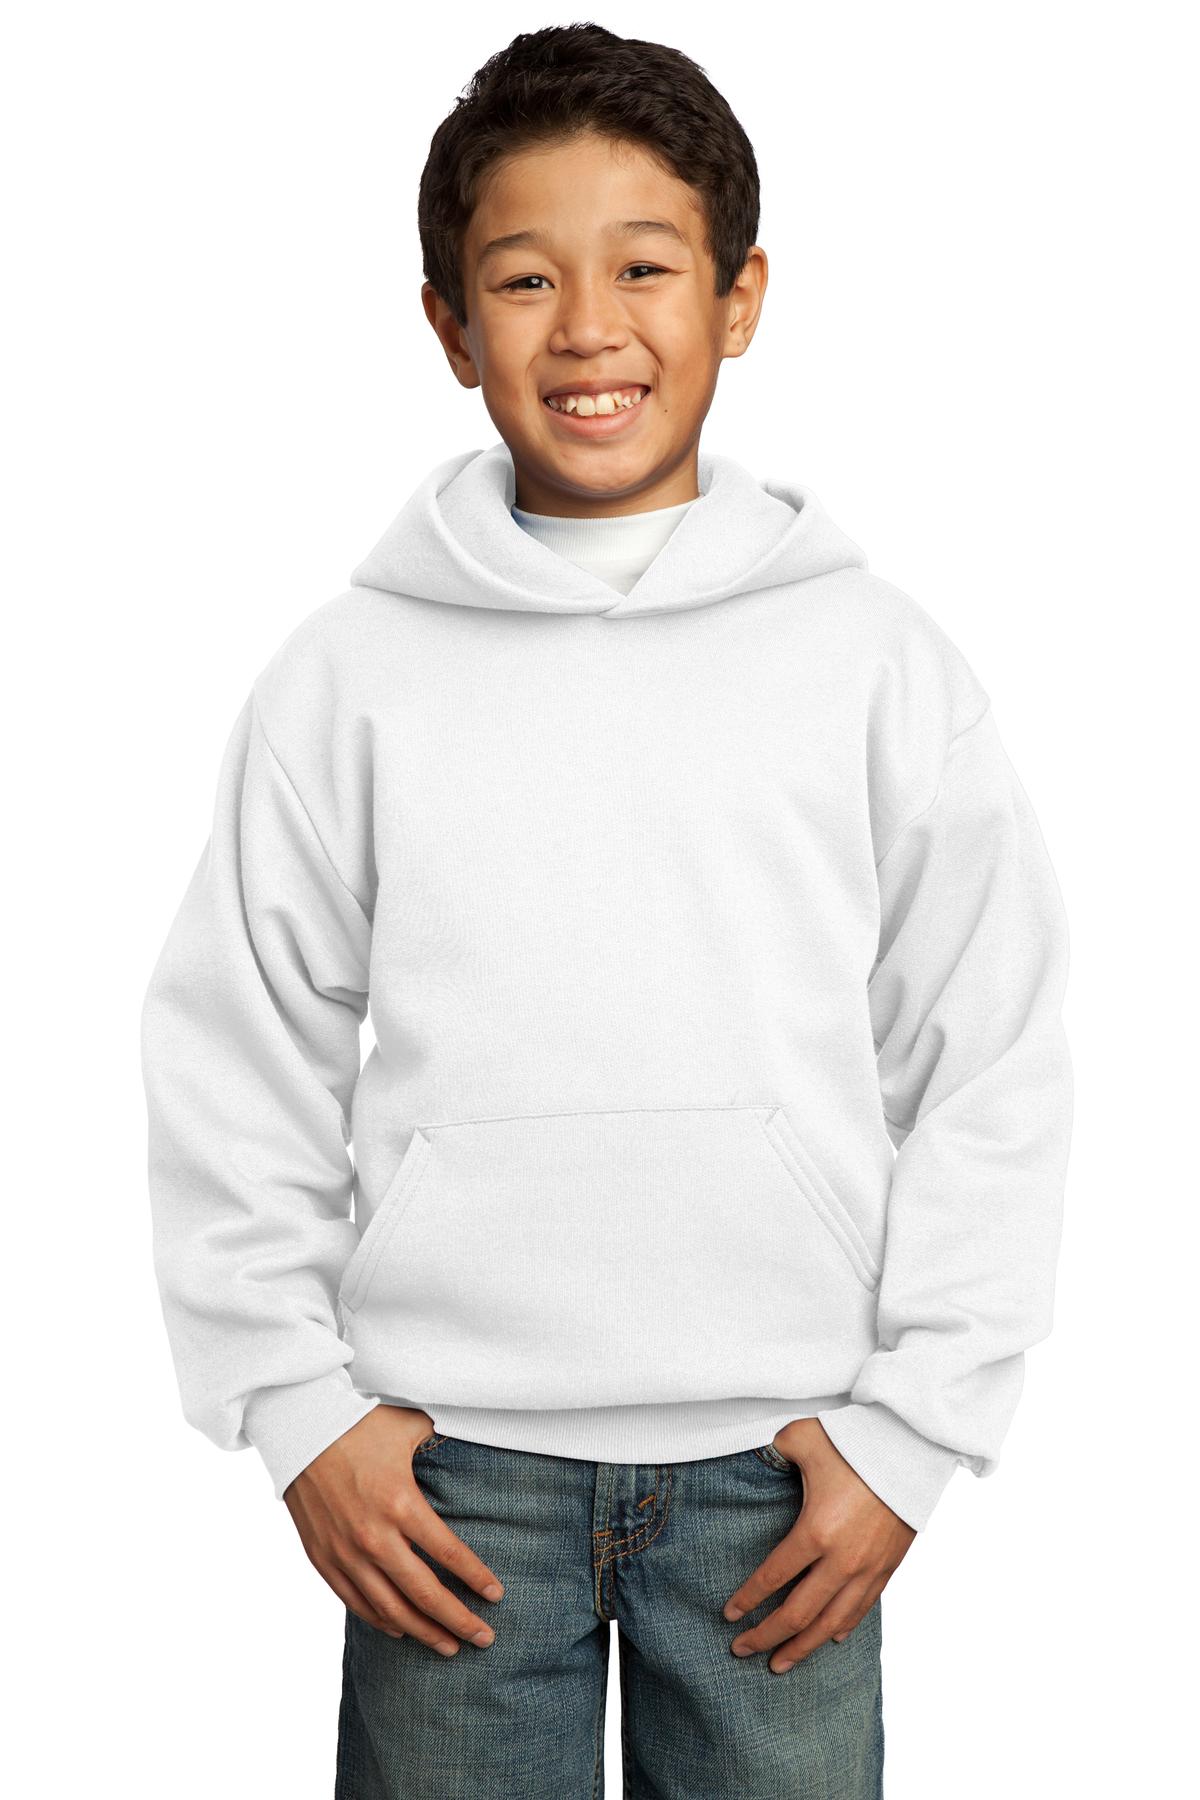 Port & Company Youth Sweatshirts & Fleece for Hospitality ® - Youth Core Fleece Pullover Hooded Sweatshirt.-Port & Company